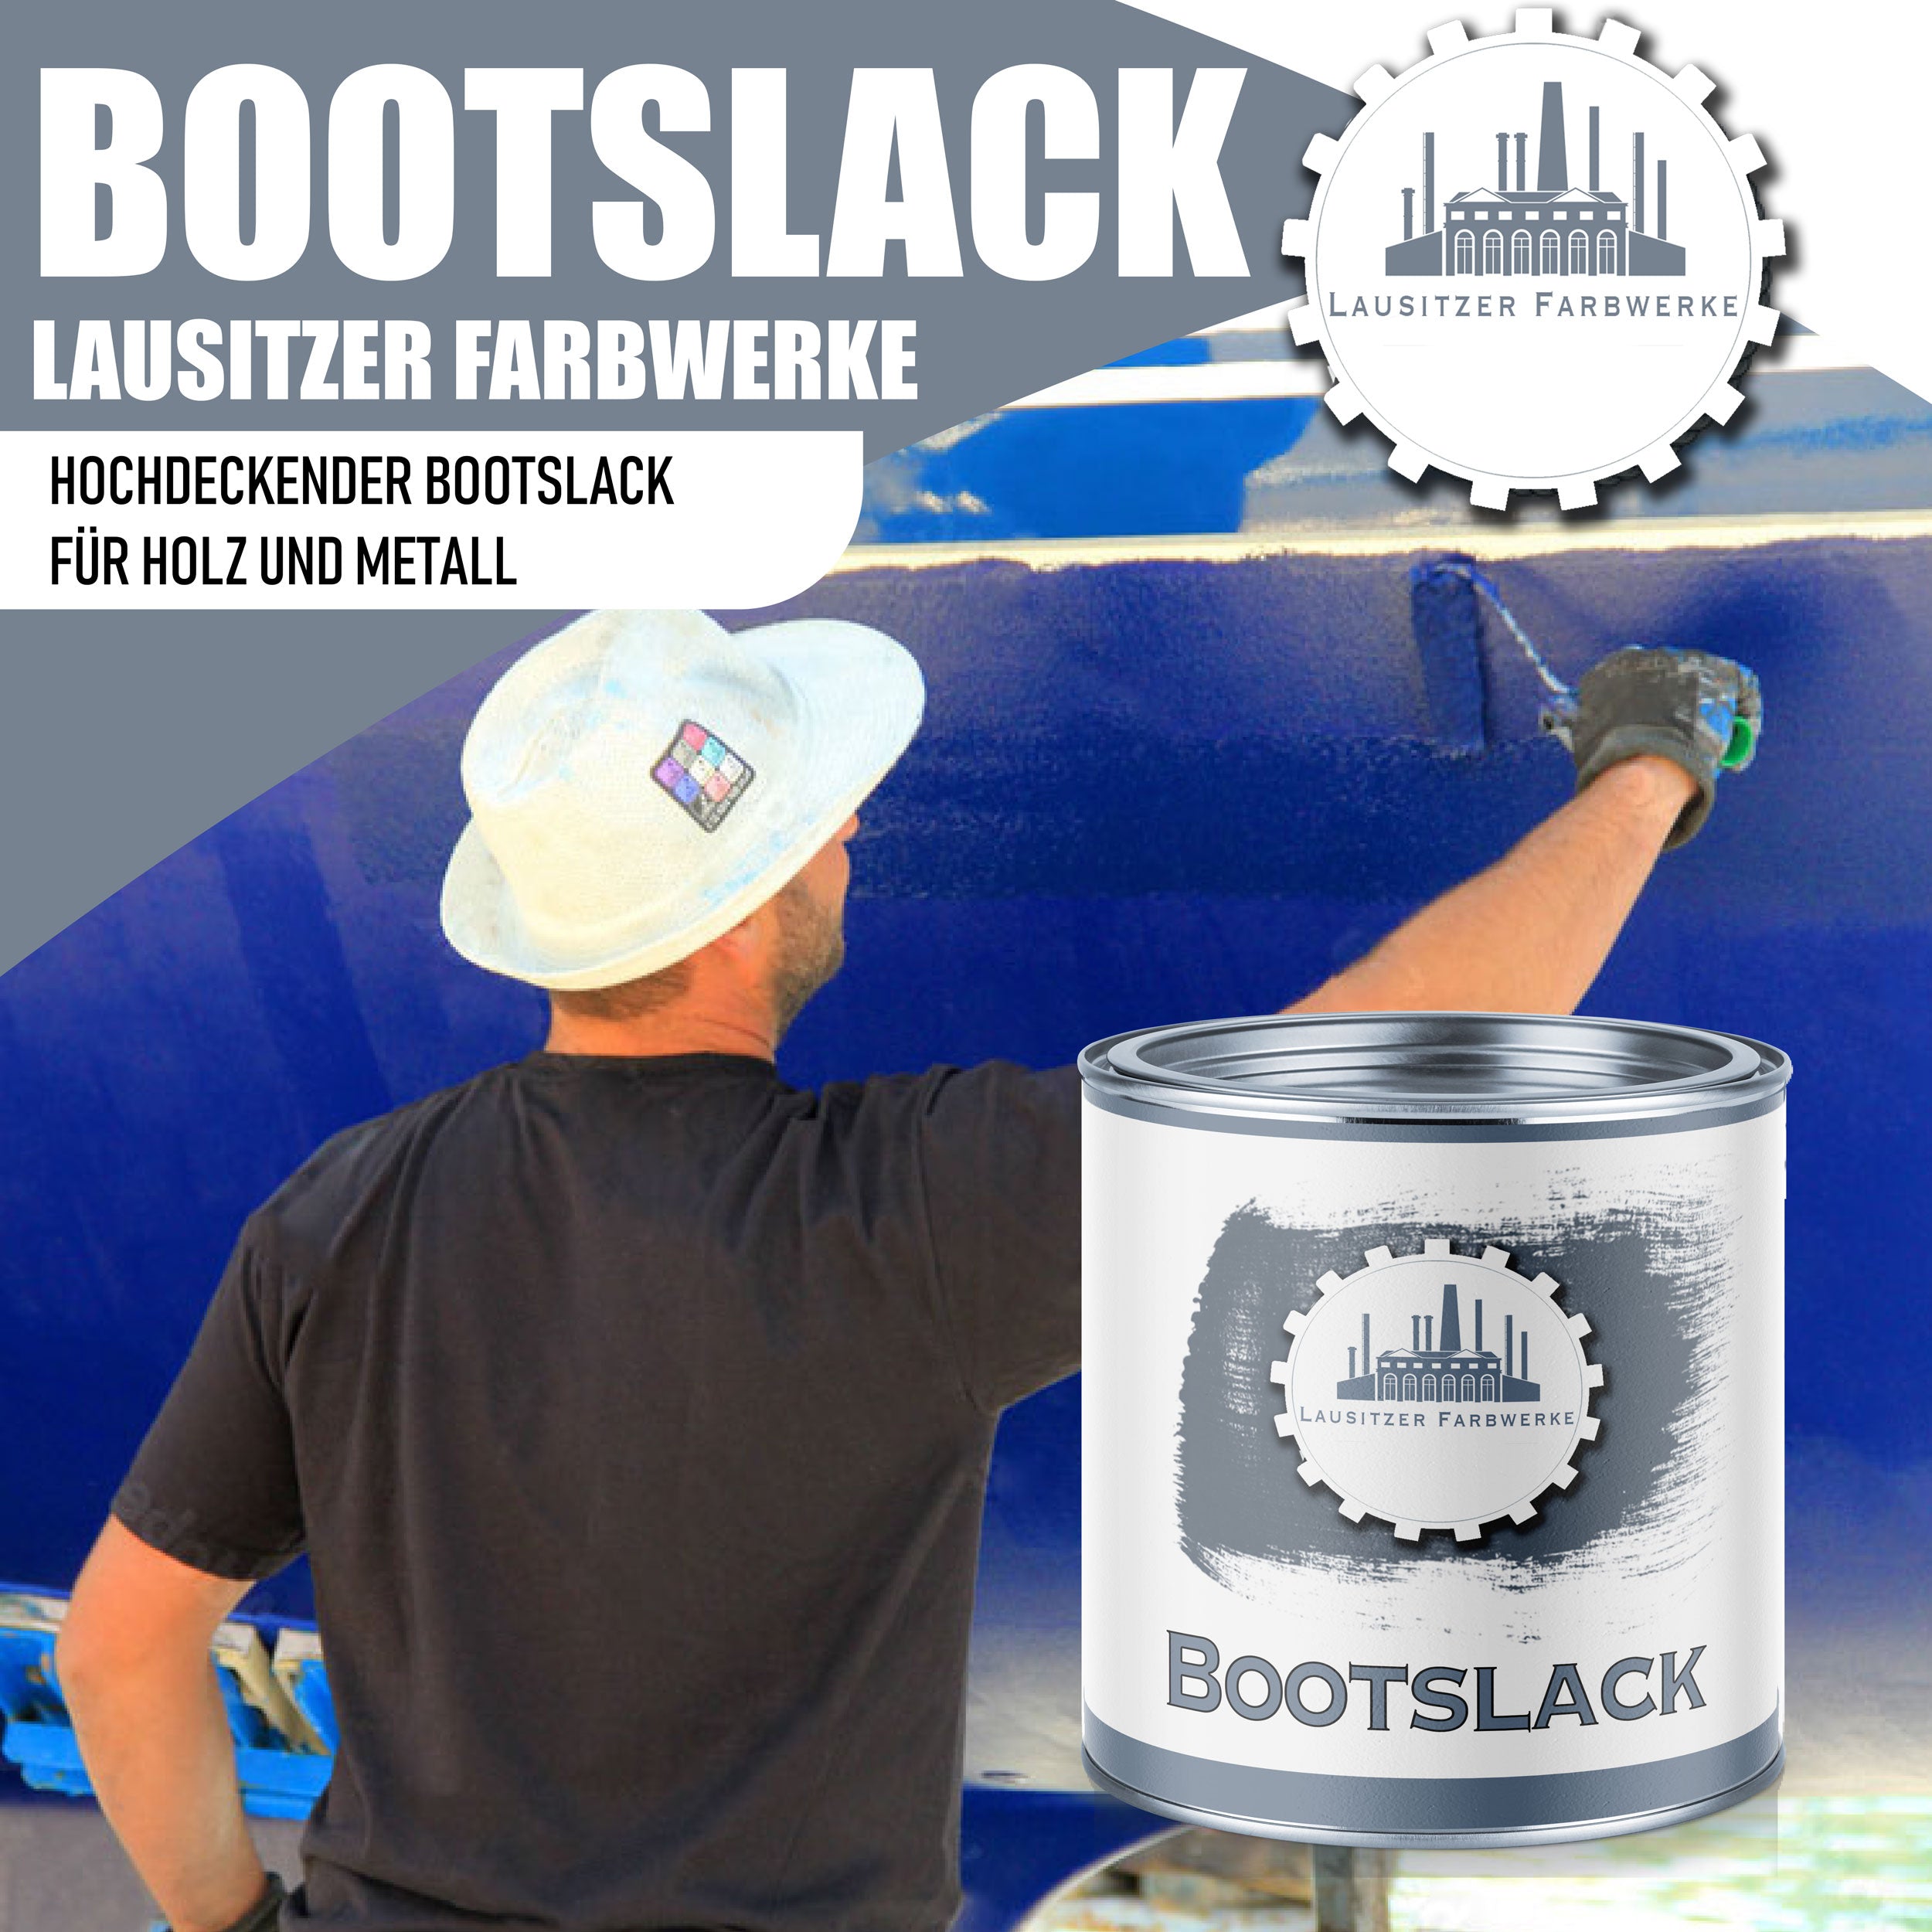 Lausitzer Farbwerke Bootslack - traditionelle Bootsfarbe - Lausitzer Farbwerke